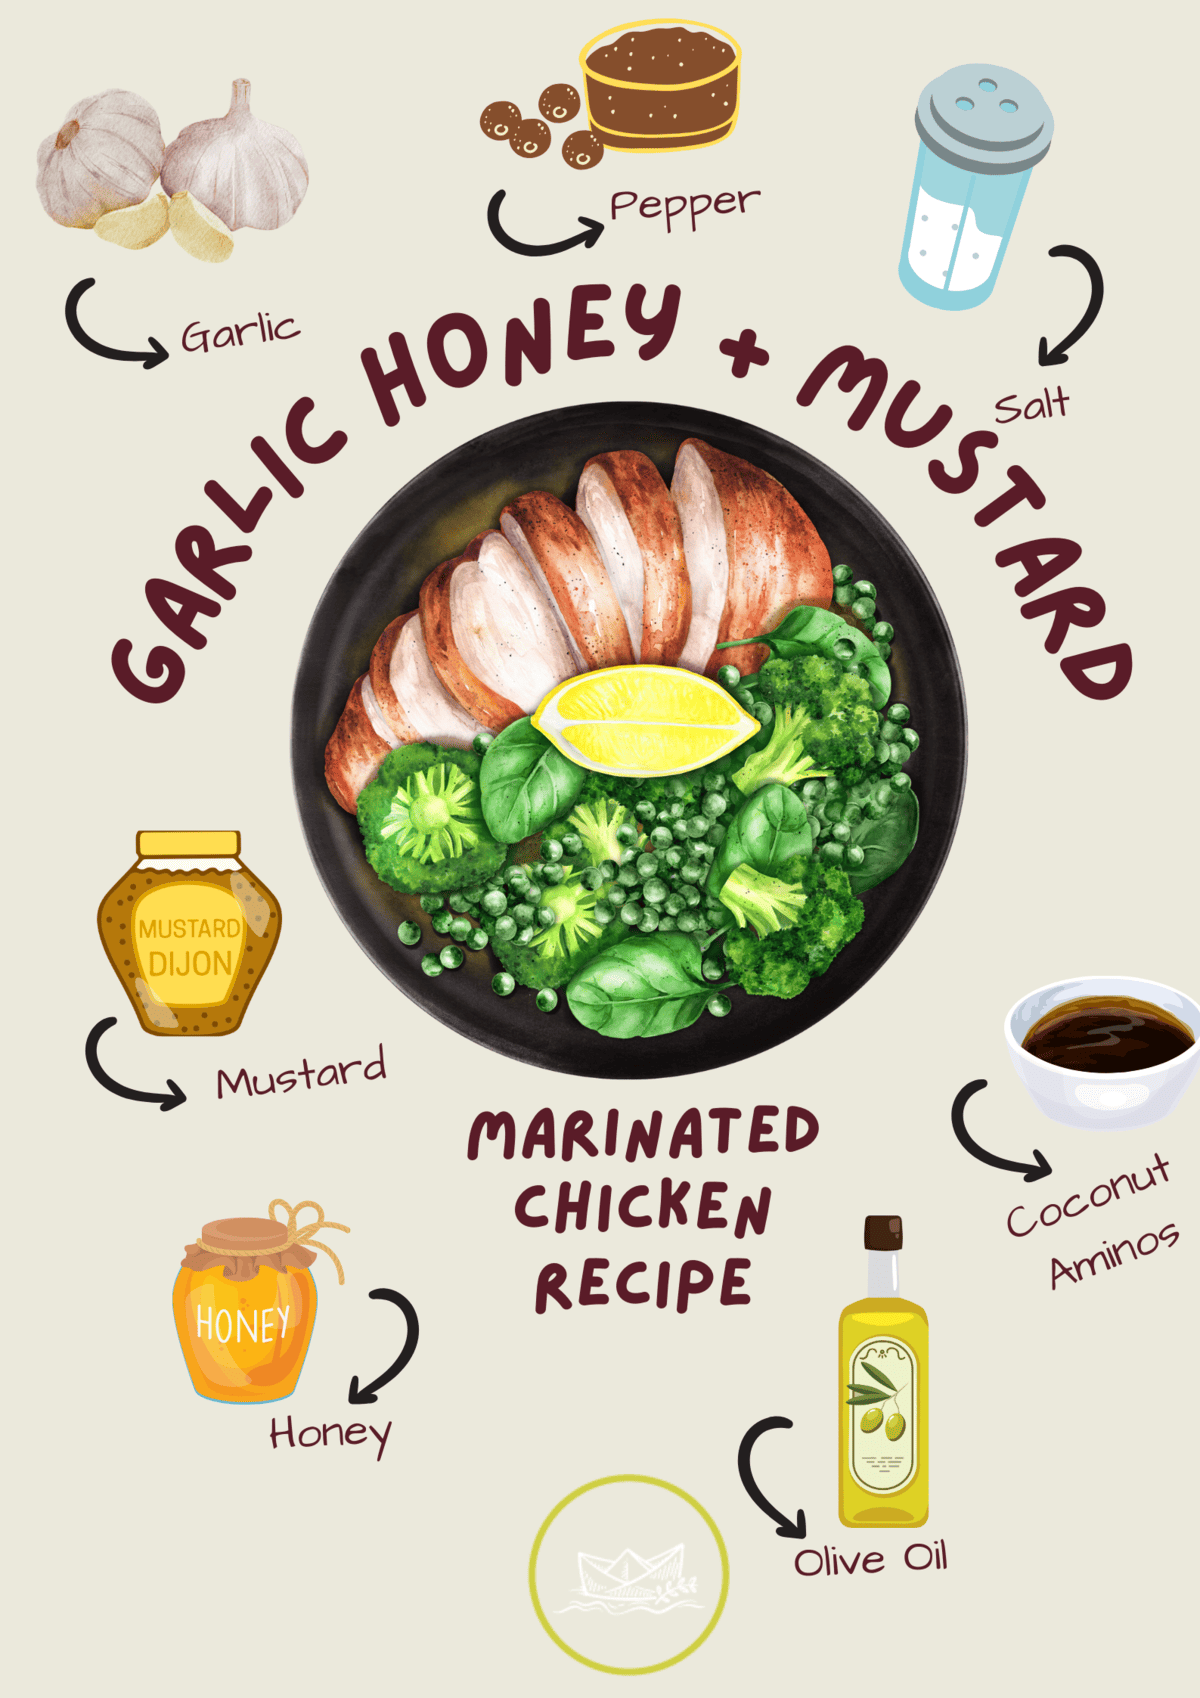 Garlic Honey Mustard Marinated Chicken illustrated ingredients